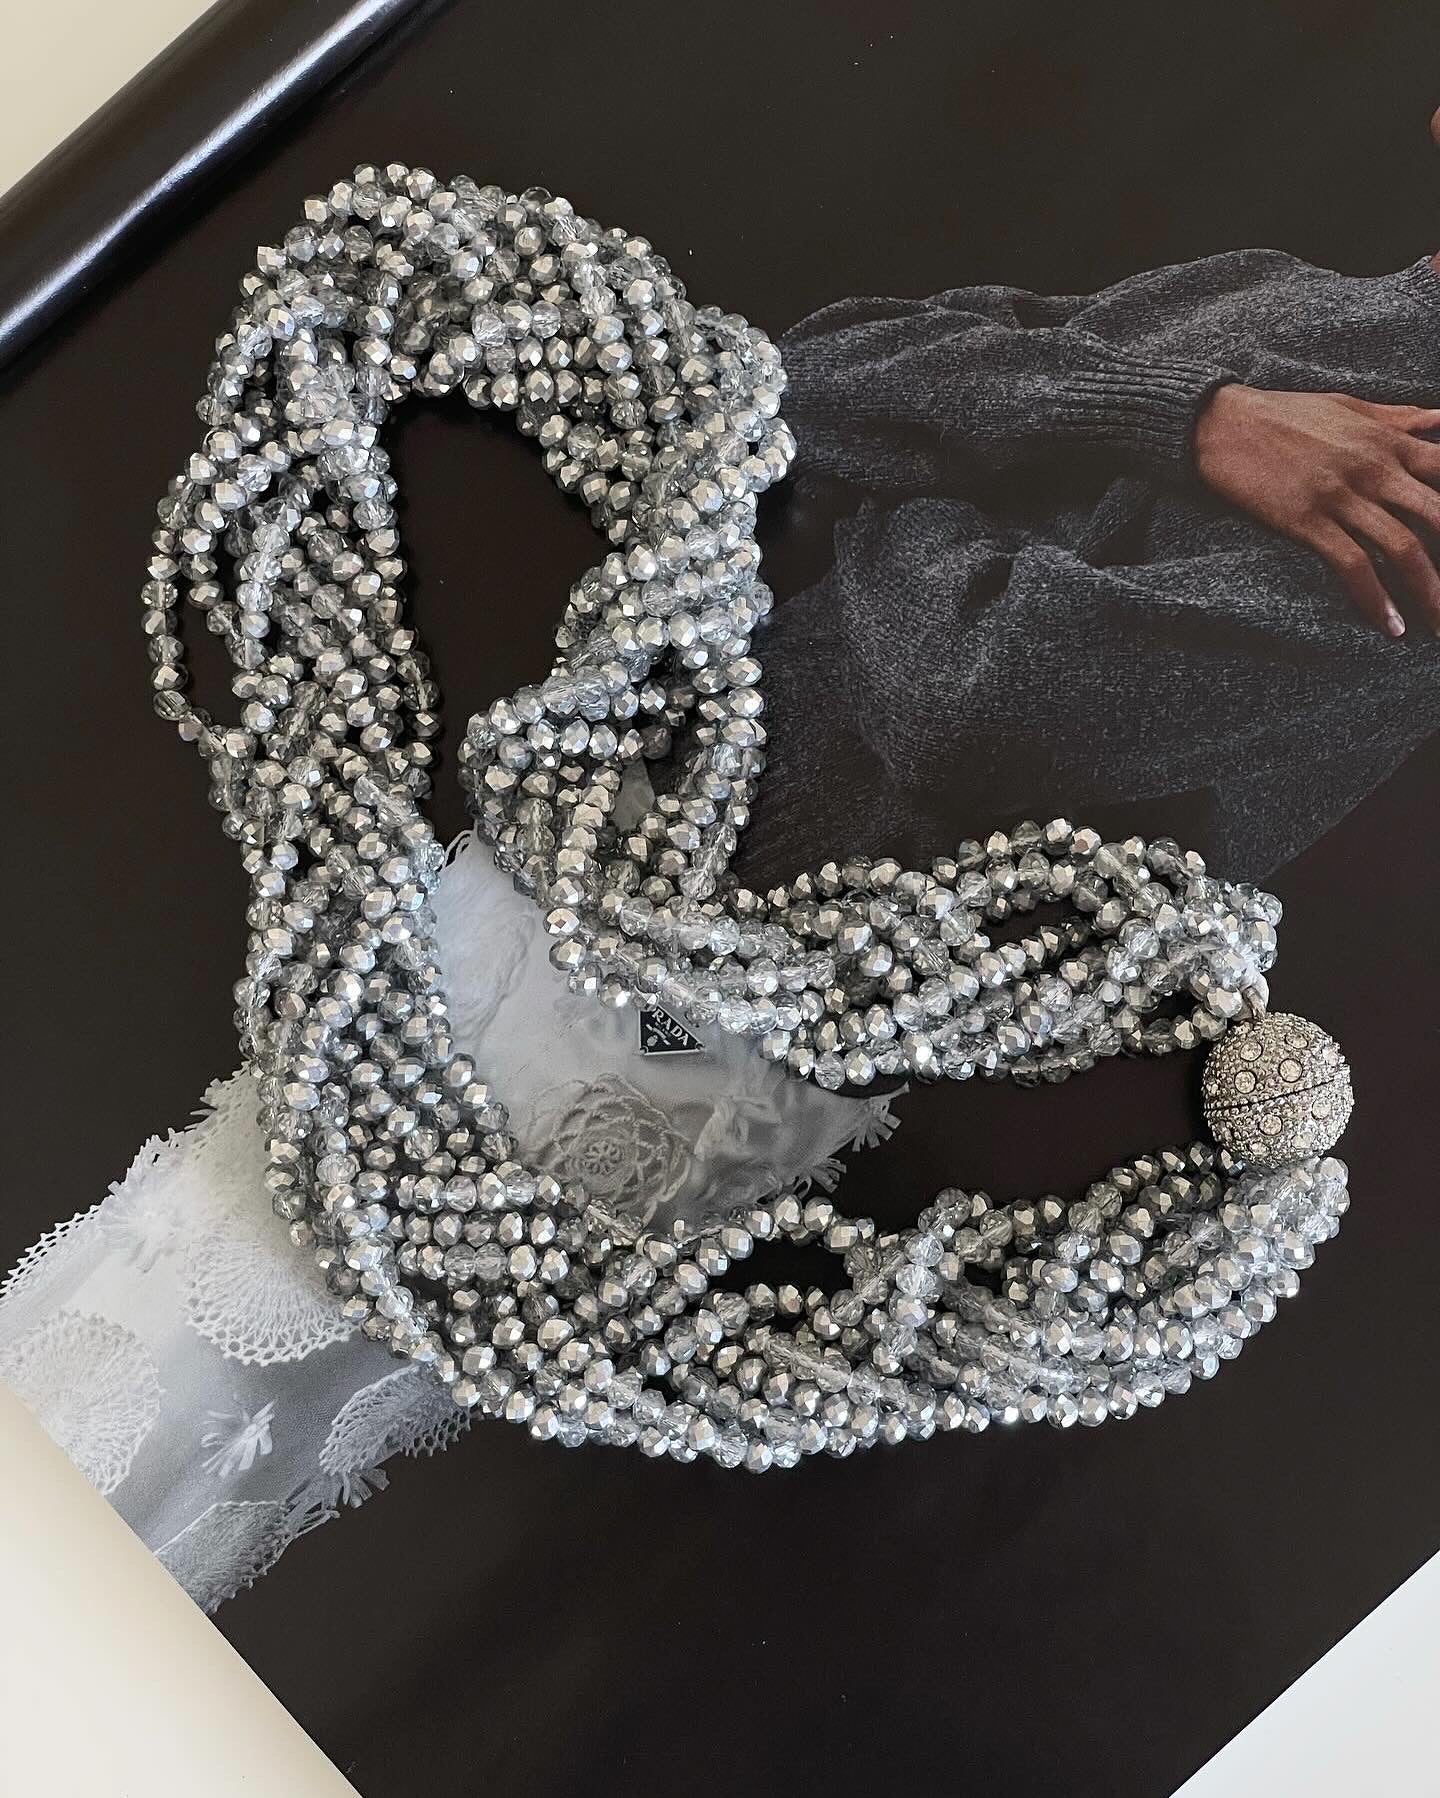 Amazing vintage beads necklace